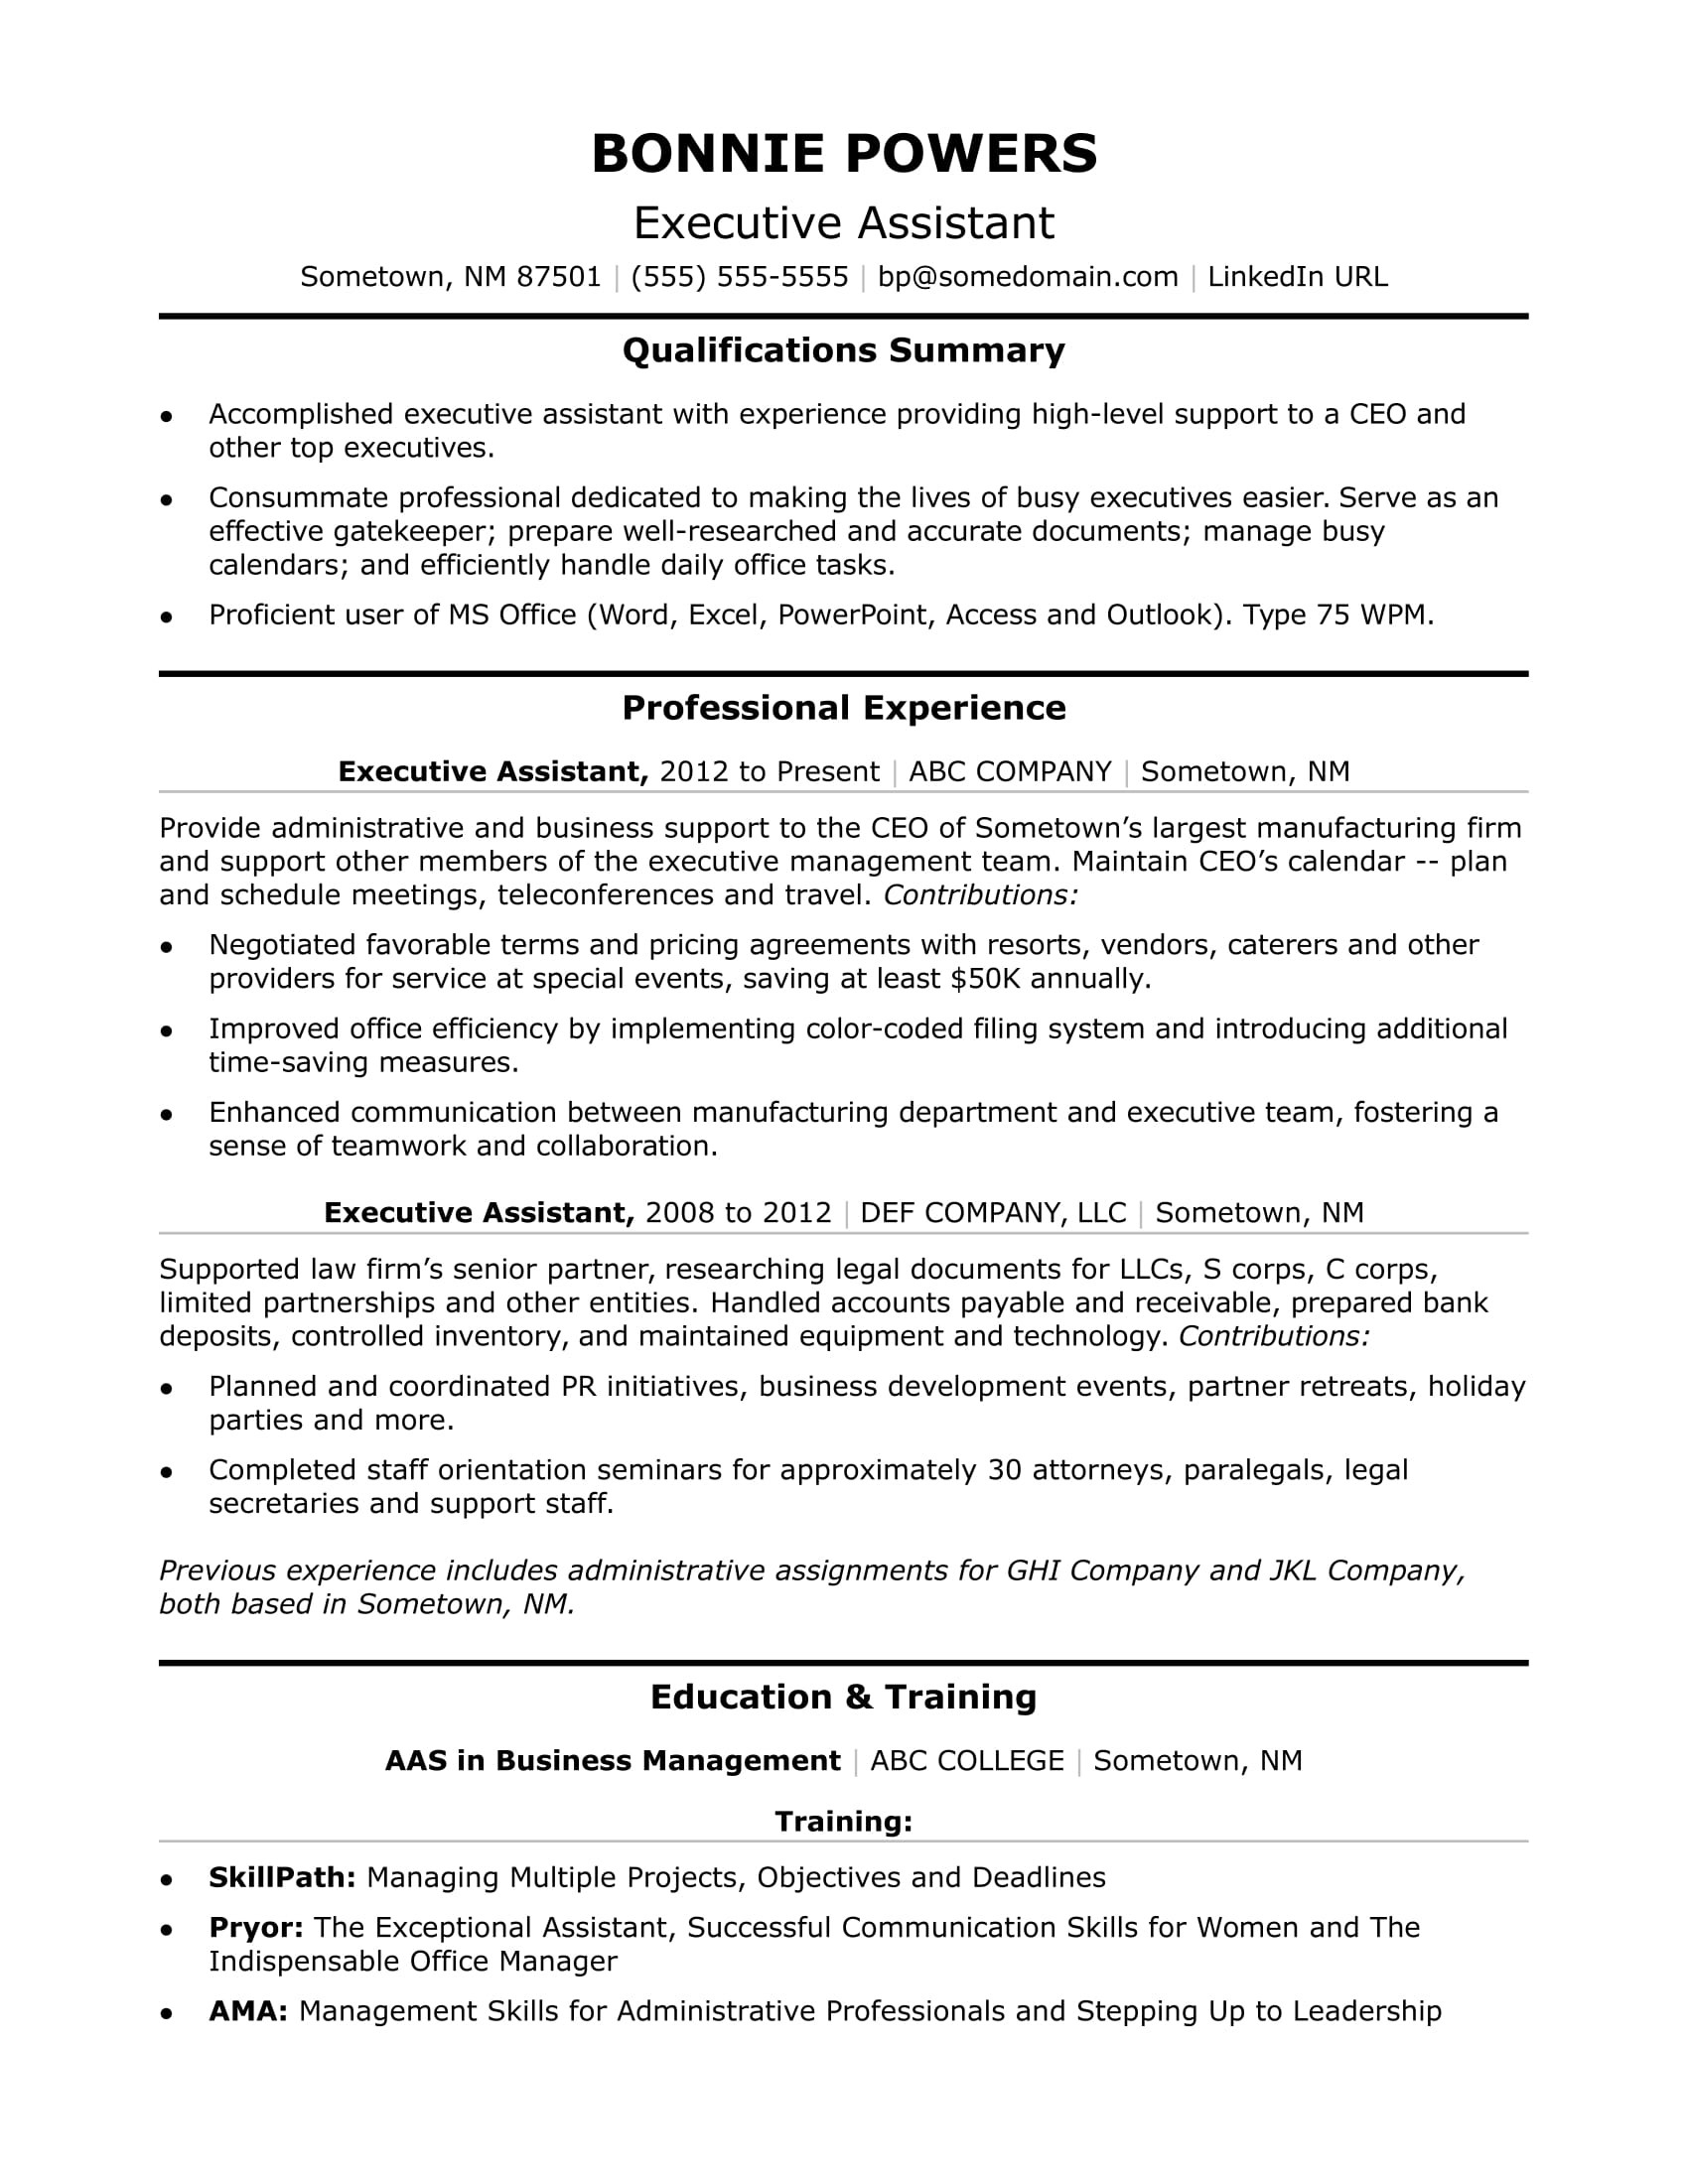 Sample Resume for Secretary Of the Company Executive Administrative assistant Resume Sample Monster.com